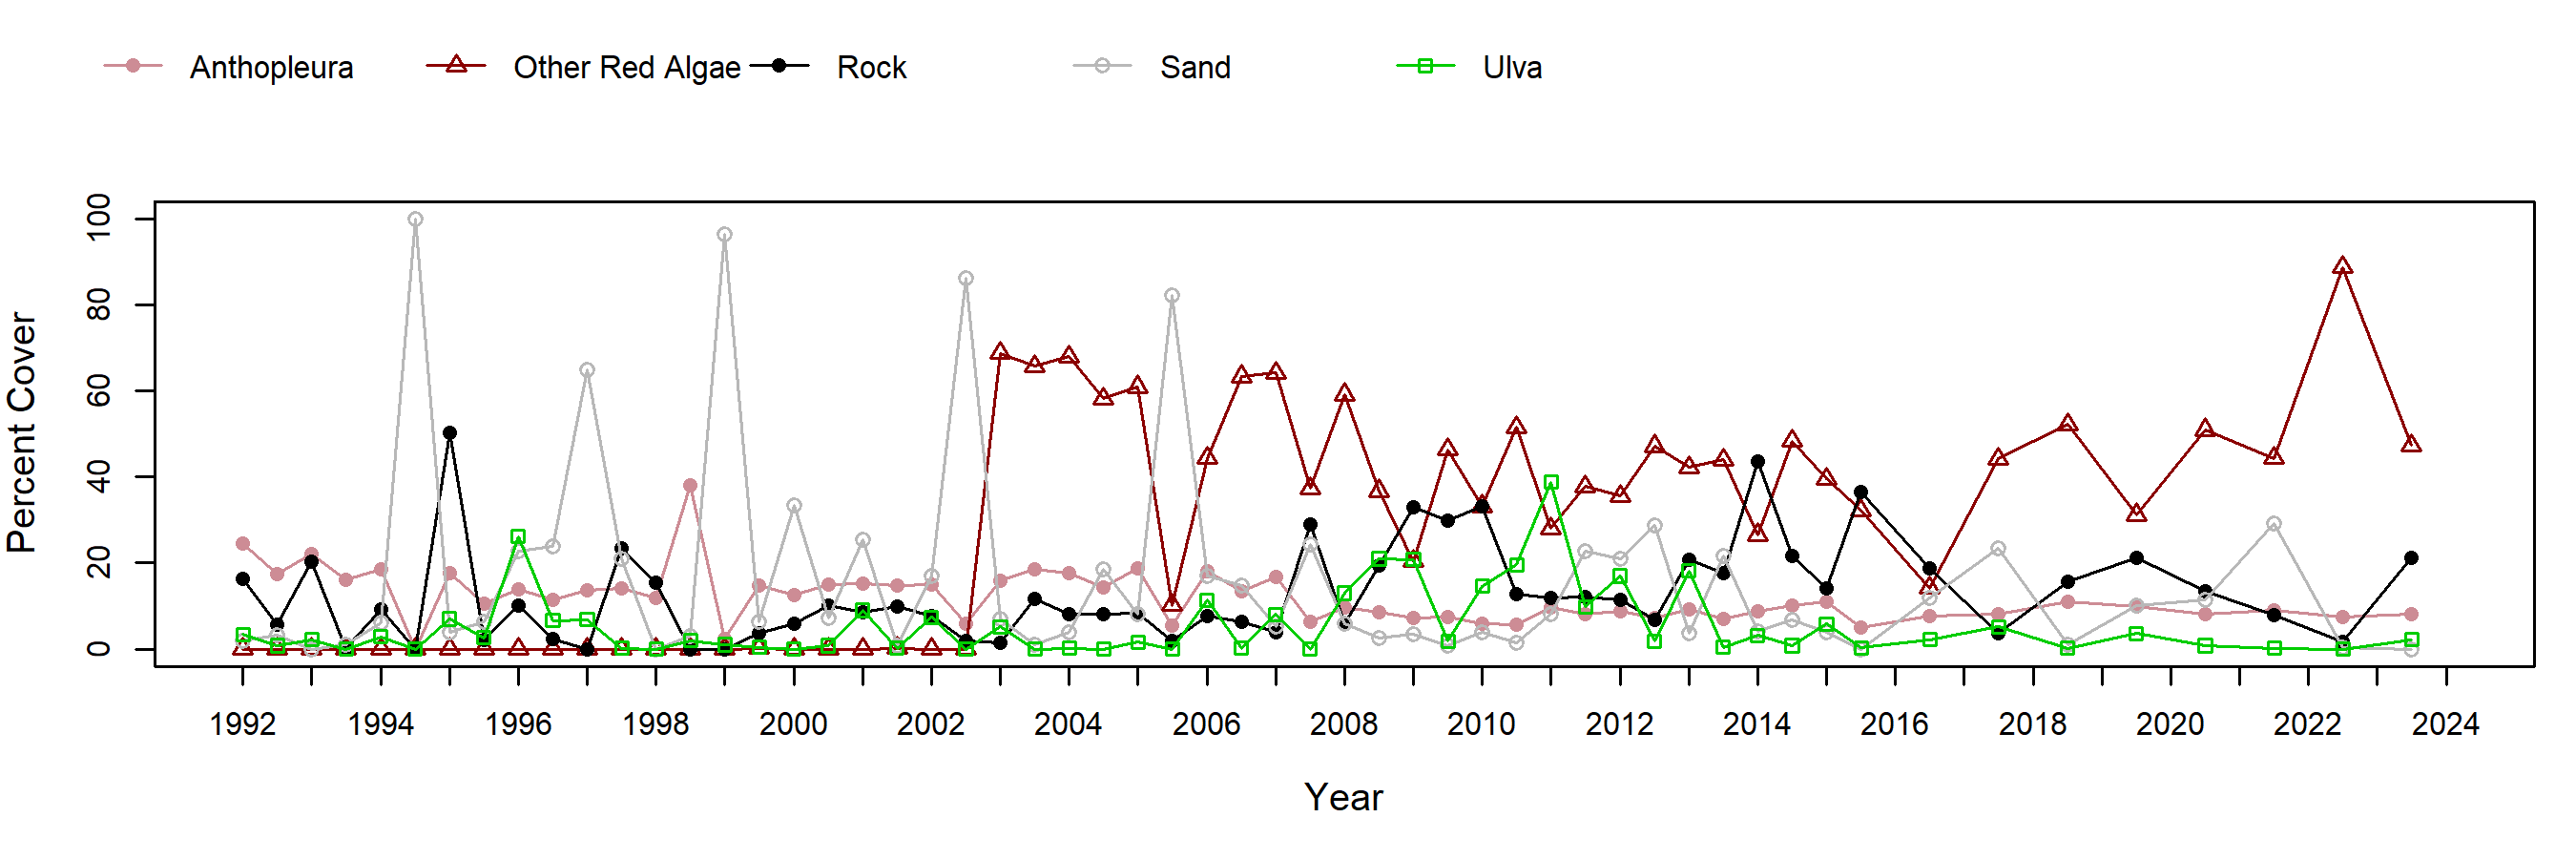 Coal Oil Point Anthopleura trend plot